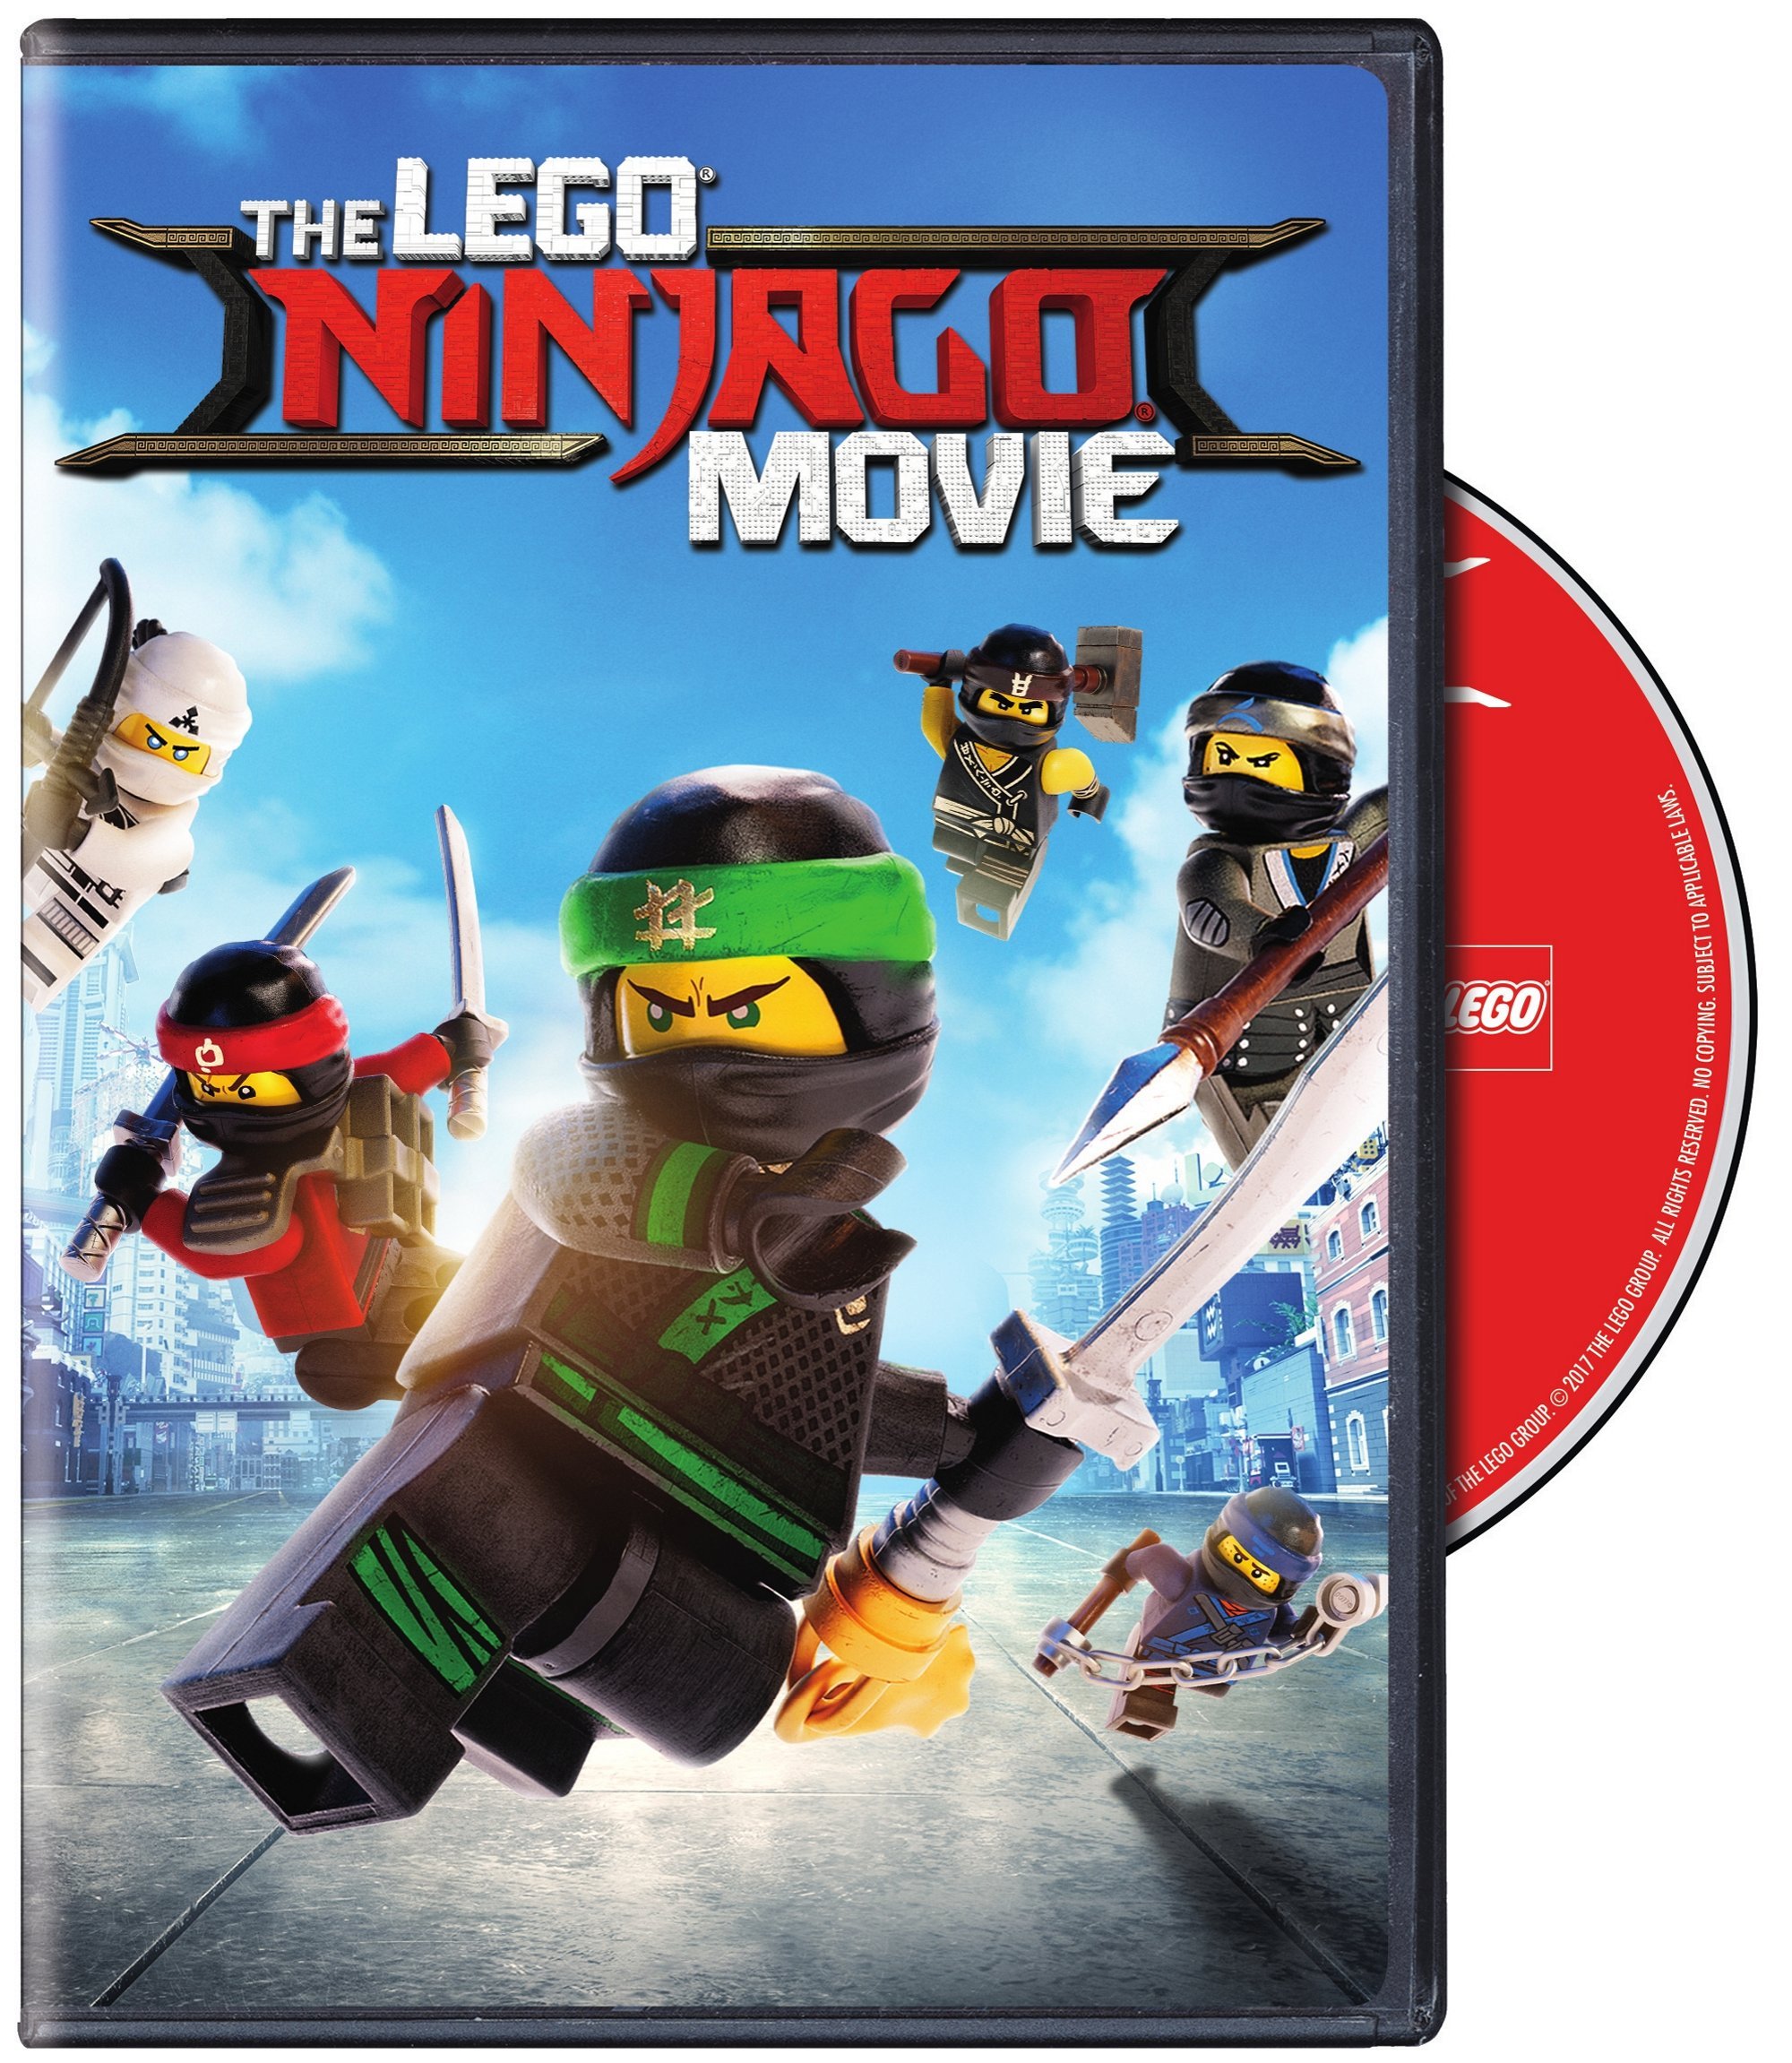 The Lego Ninjago Movie (DVD), Warner Home Video, Kids & Family - image 4 of 5